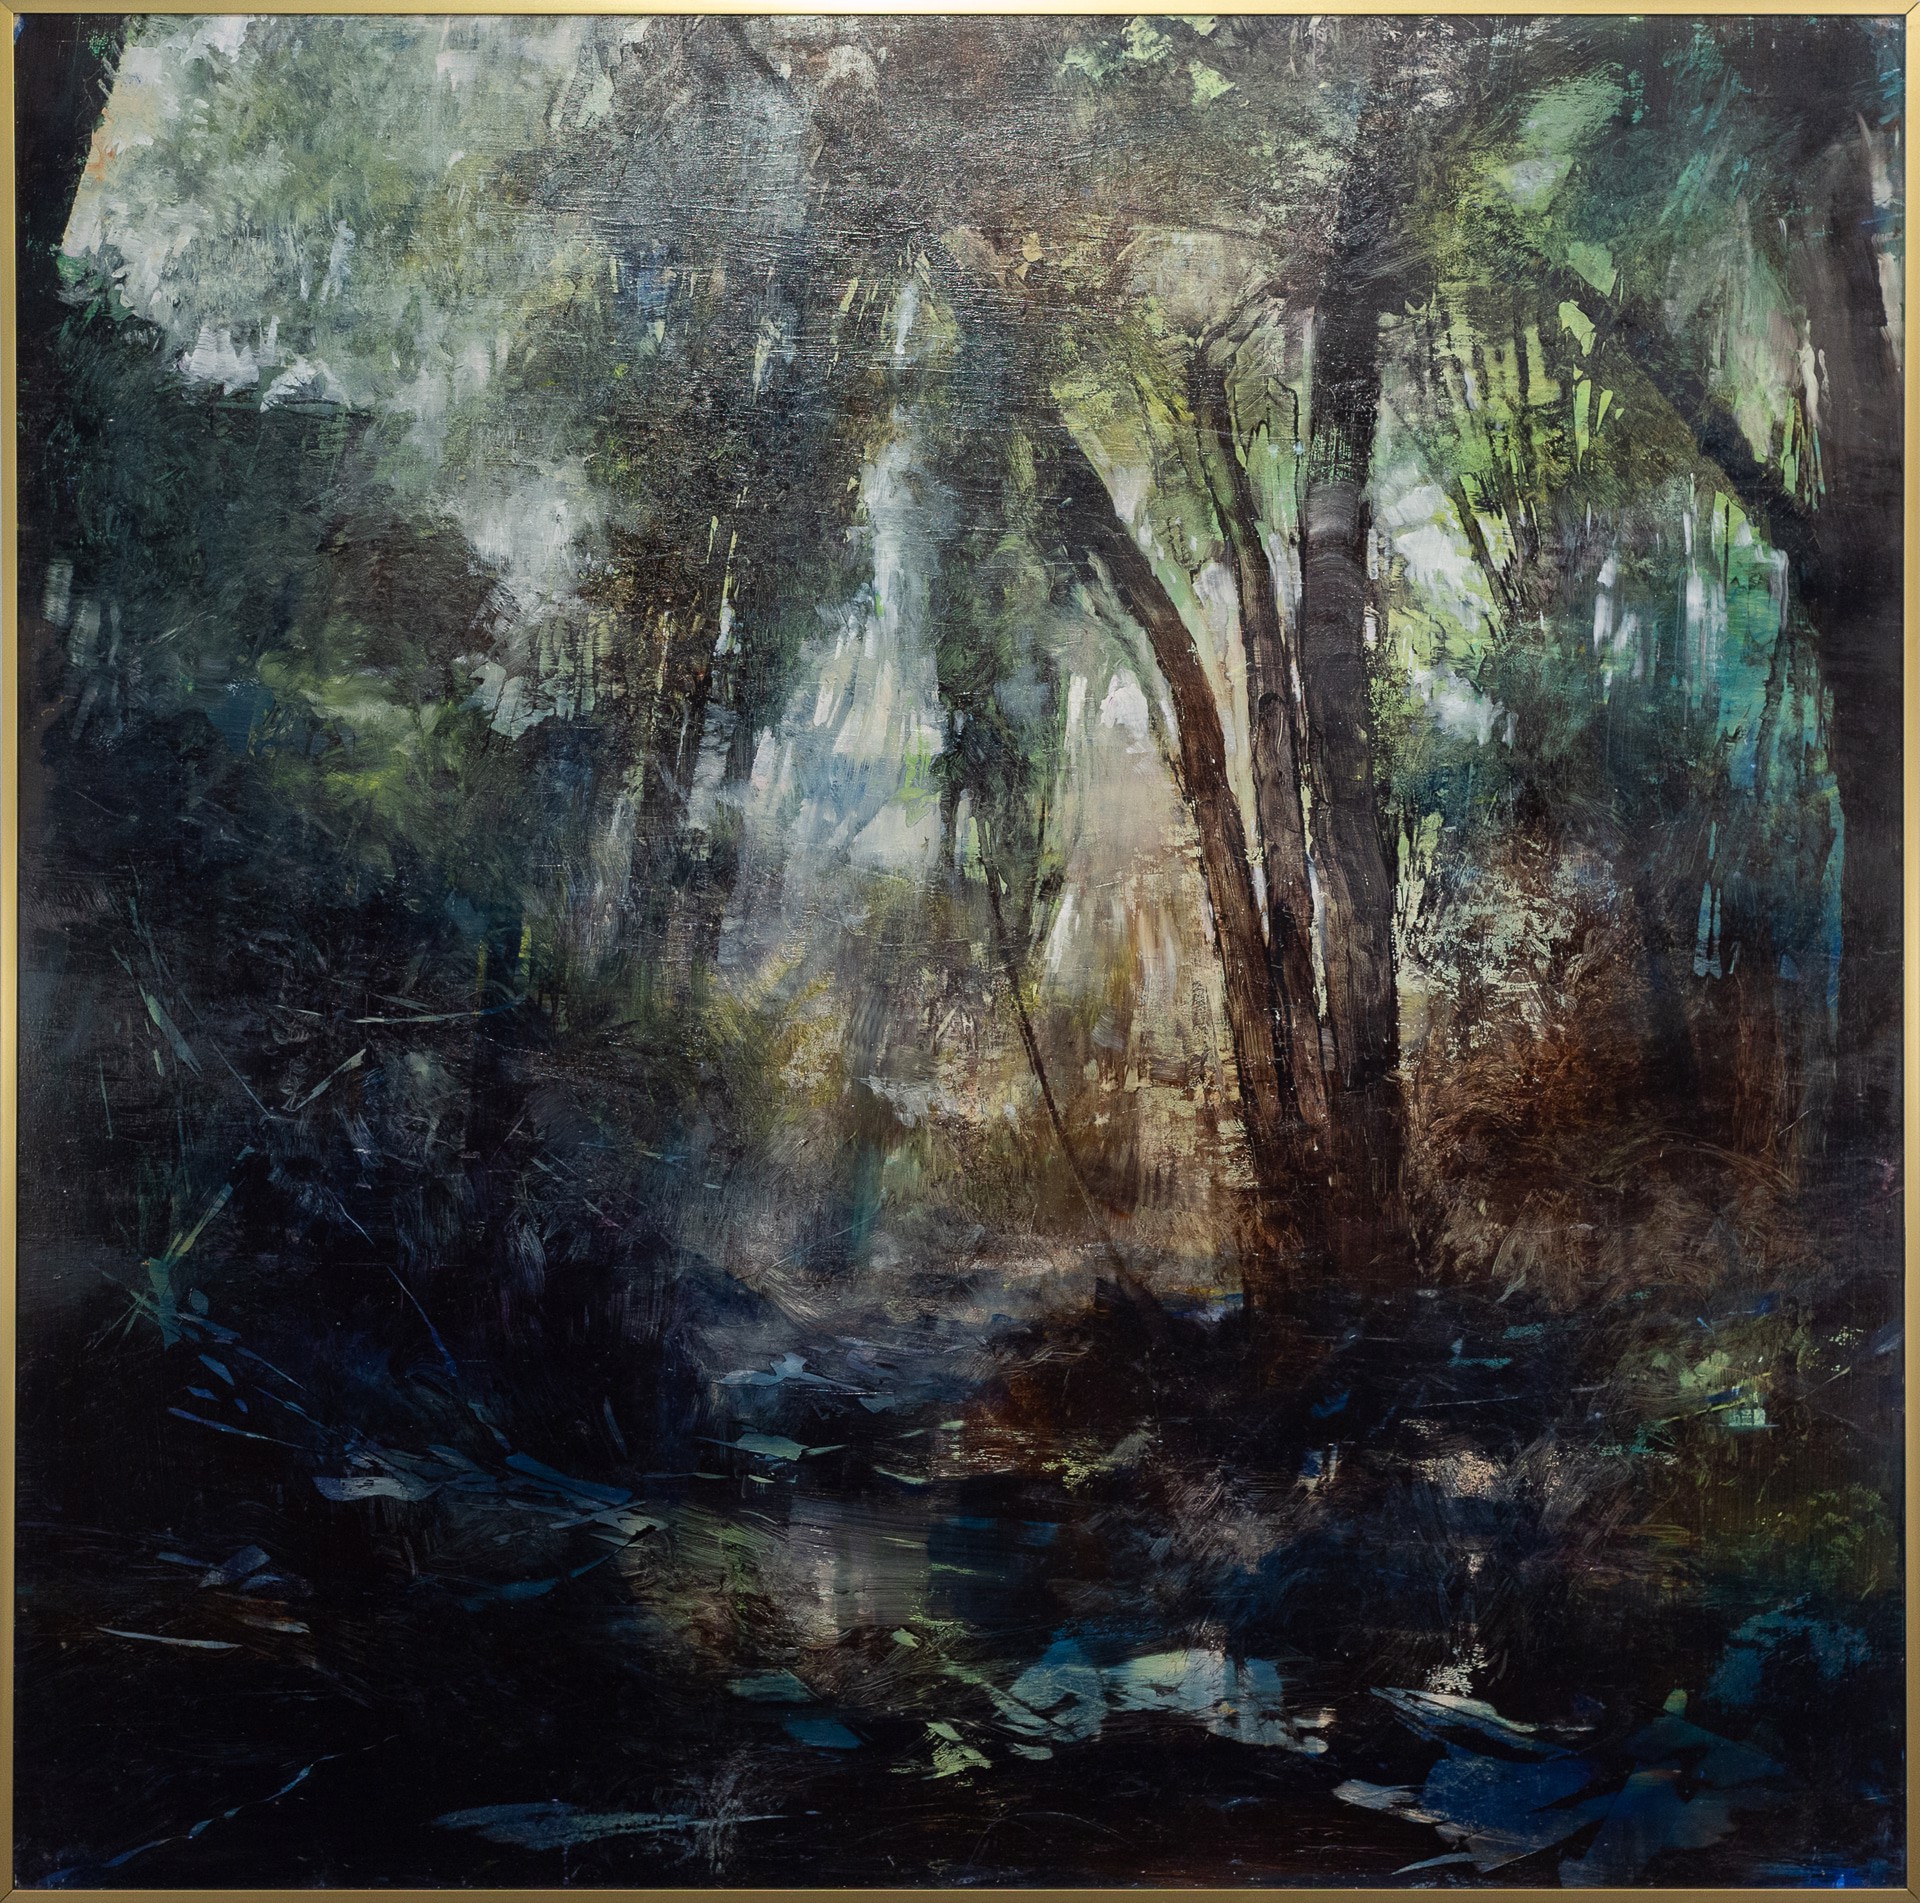 Enchanted Forest by David Allen Dunlop